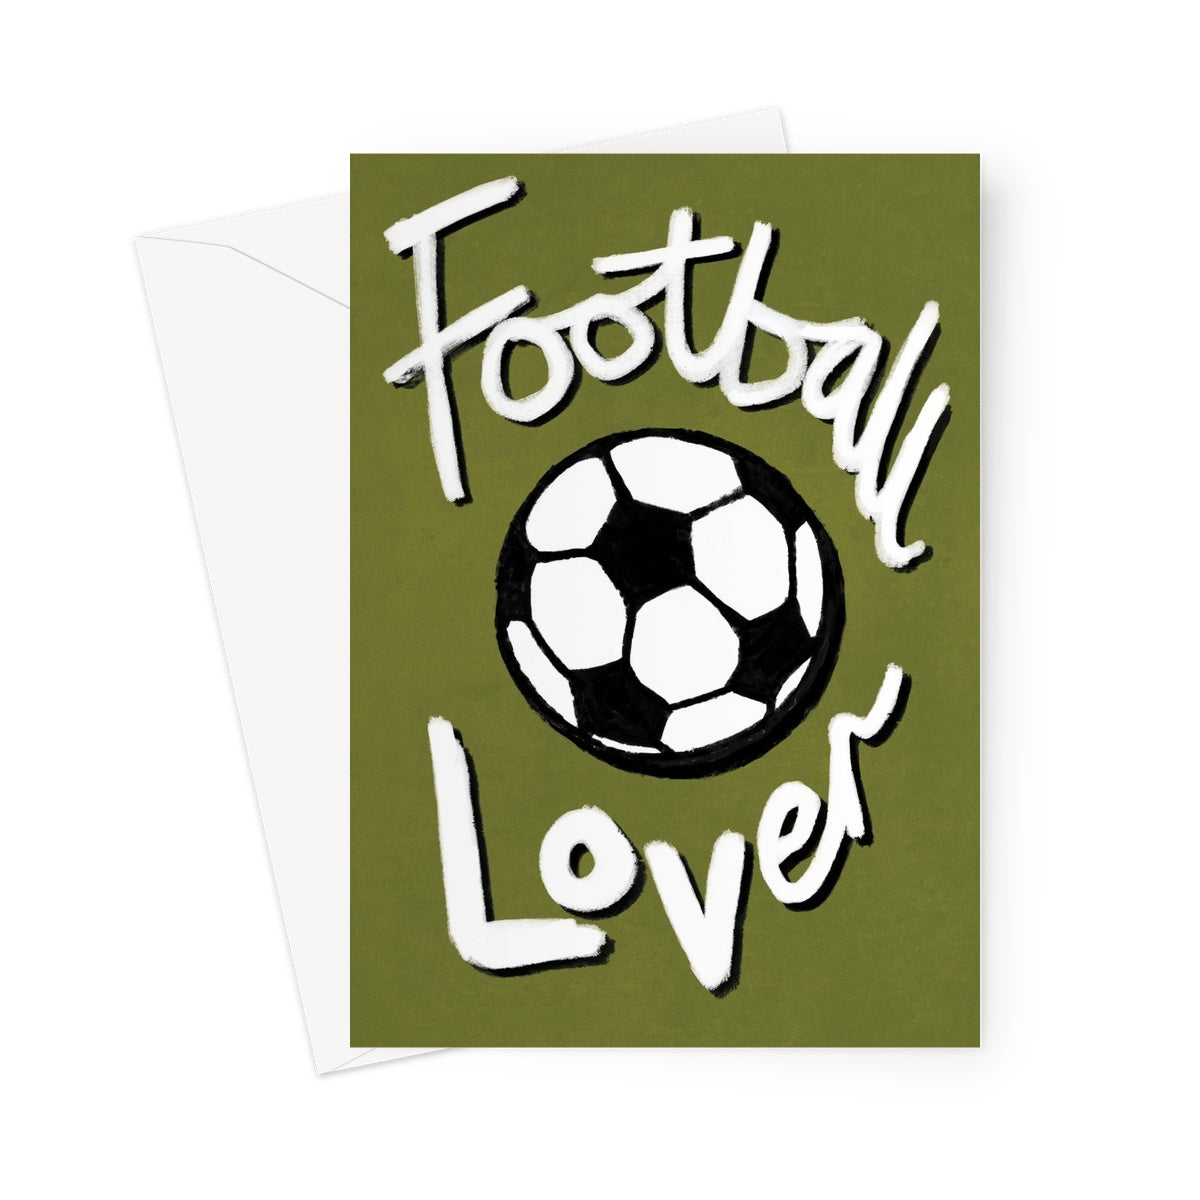 Football Lover Print - Olive Green, Black, White Greeting Card